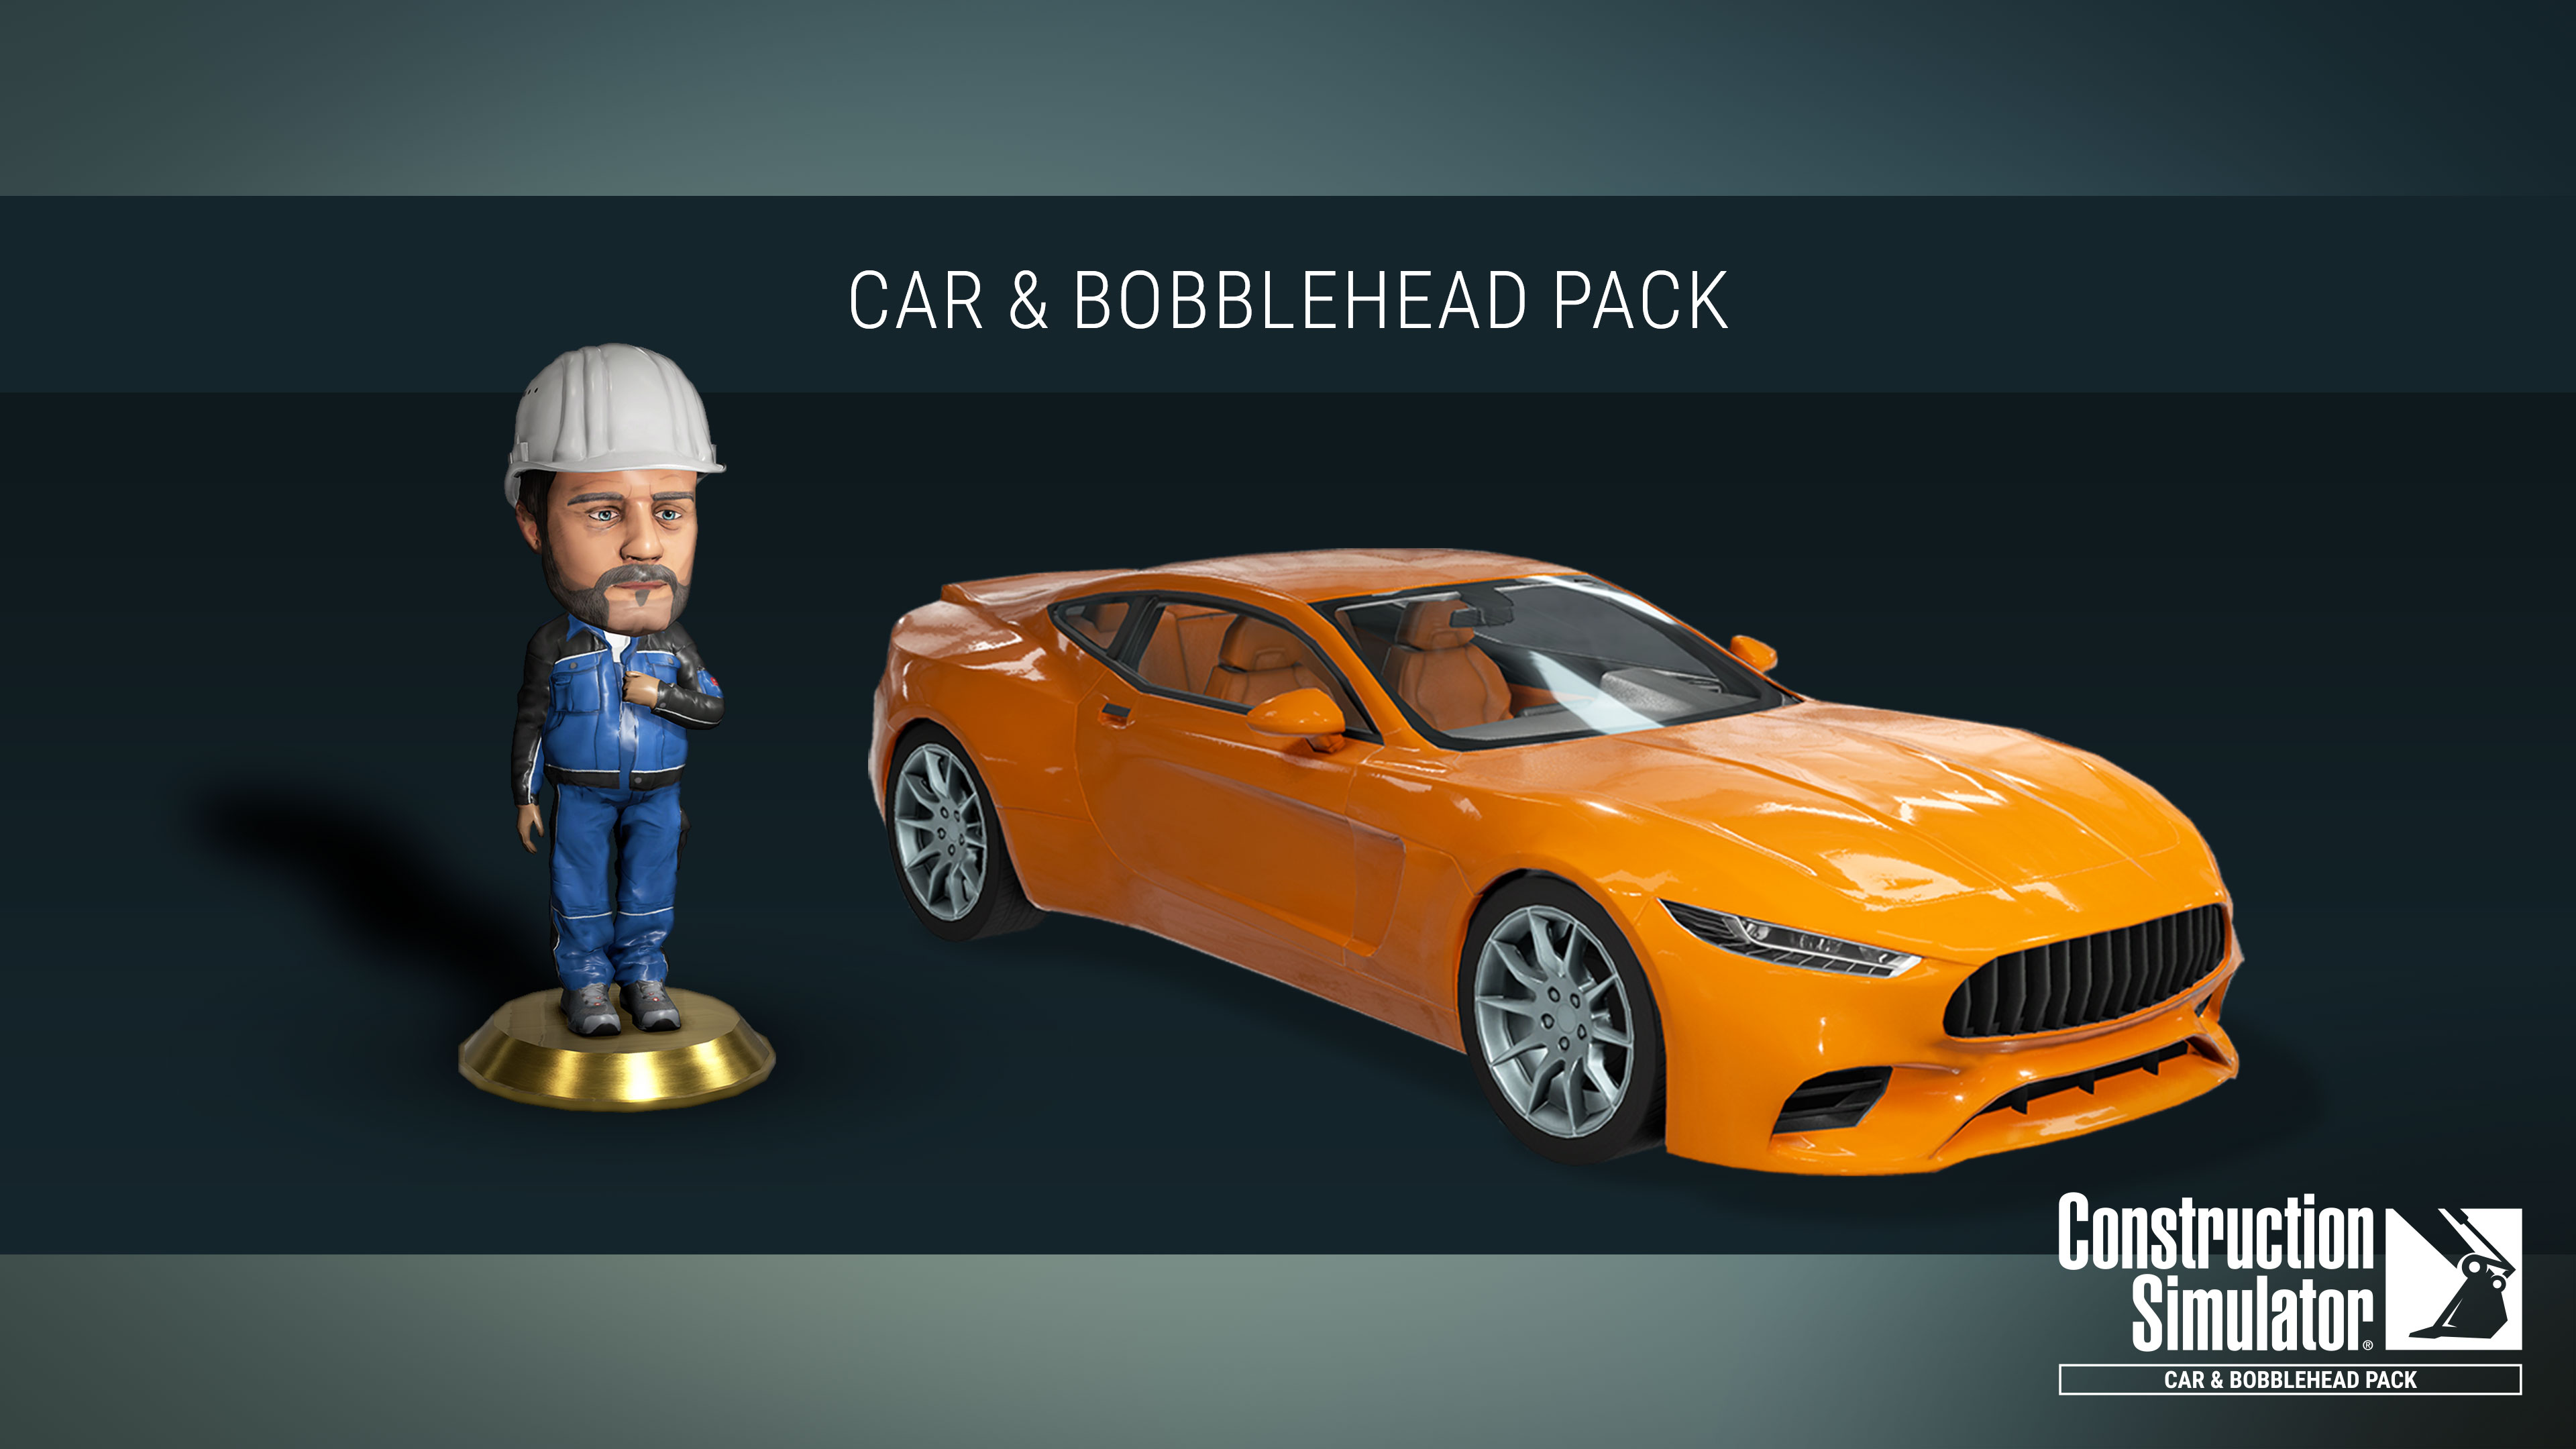 Construction Simulator - Car and Bobblehead pack